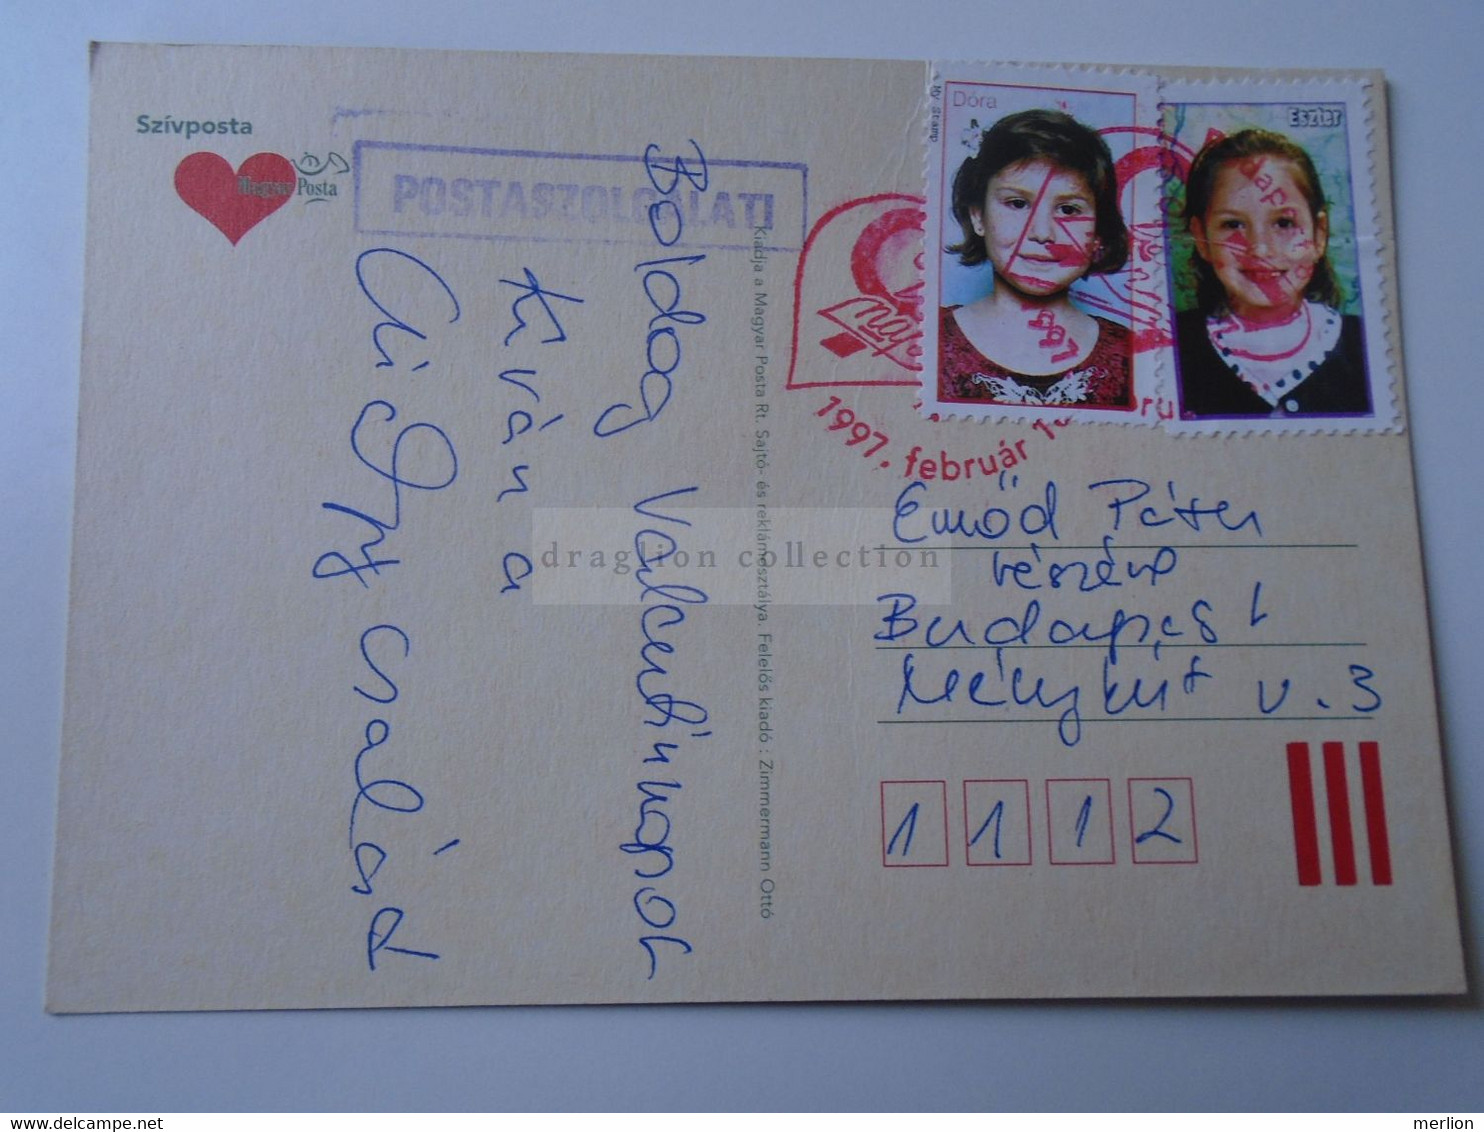 D188962  Hungary  Private Stamps - Szívposta  Postaszolgálati   1997   Magyar Posta - Postmark Collection